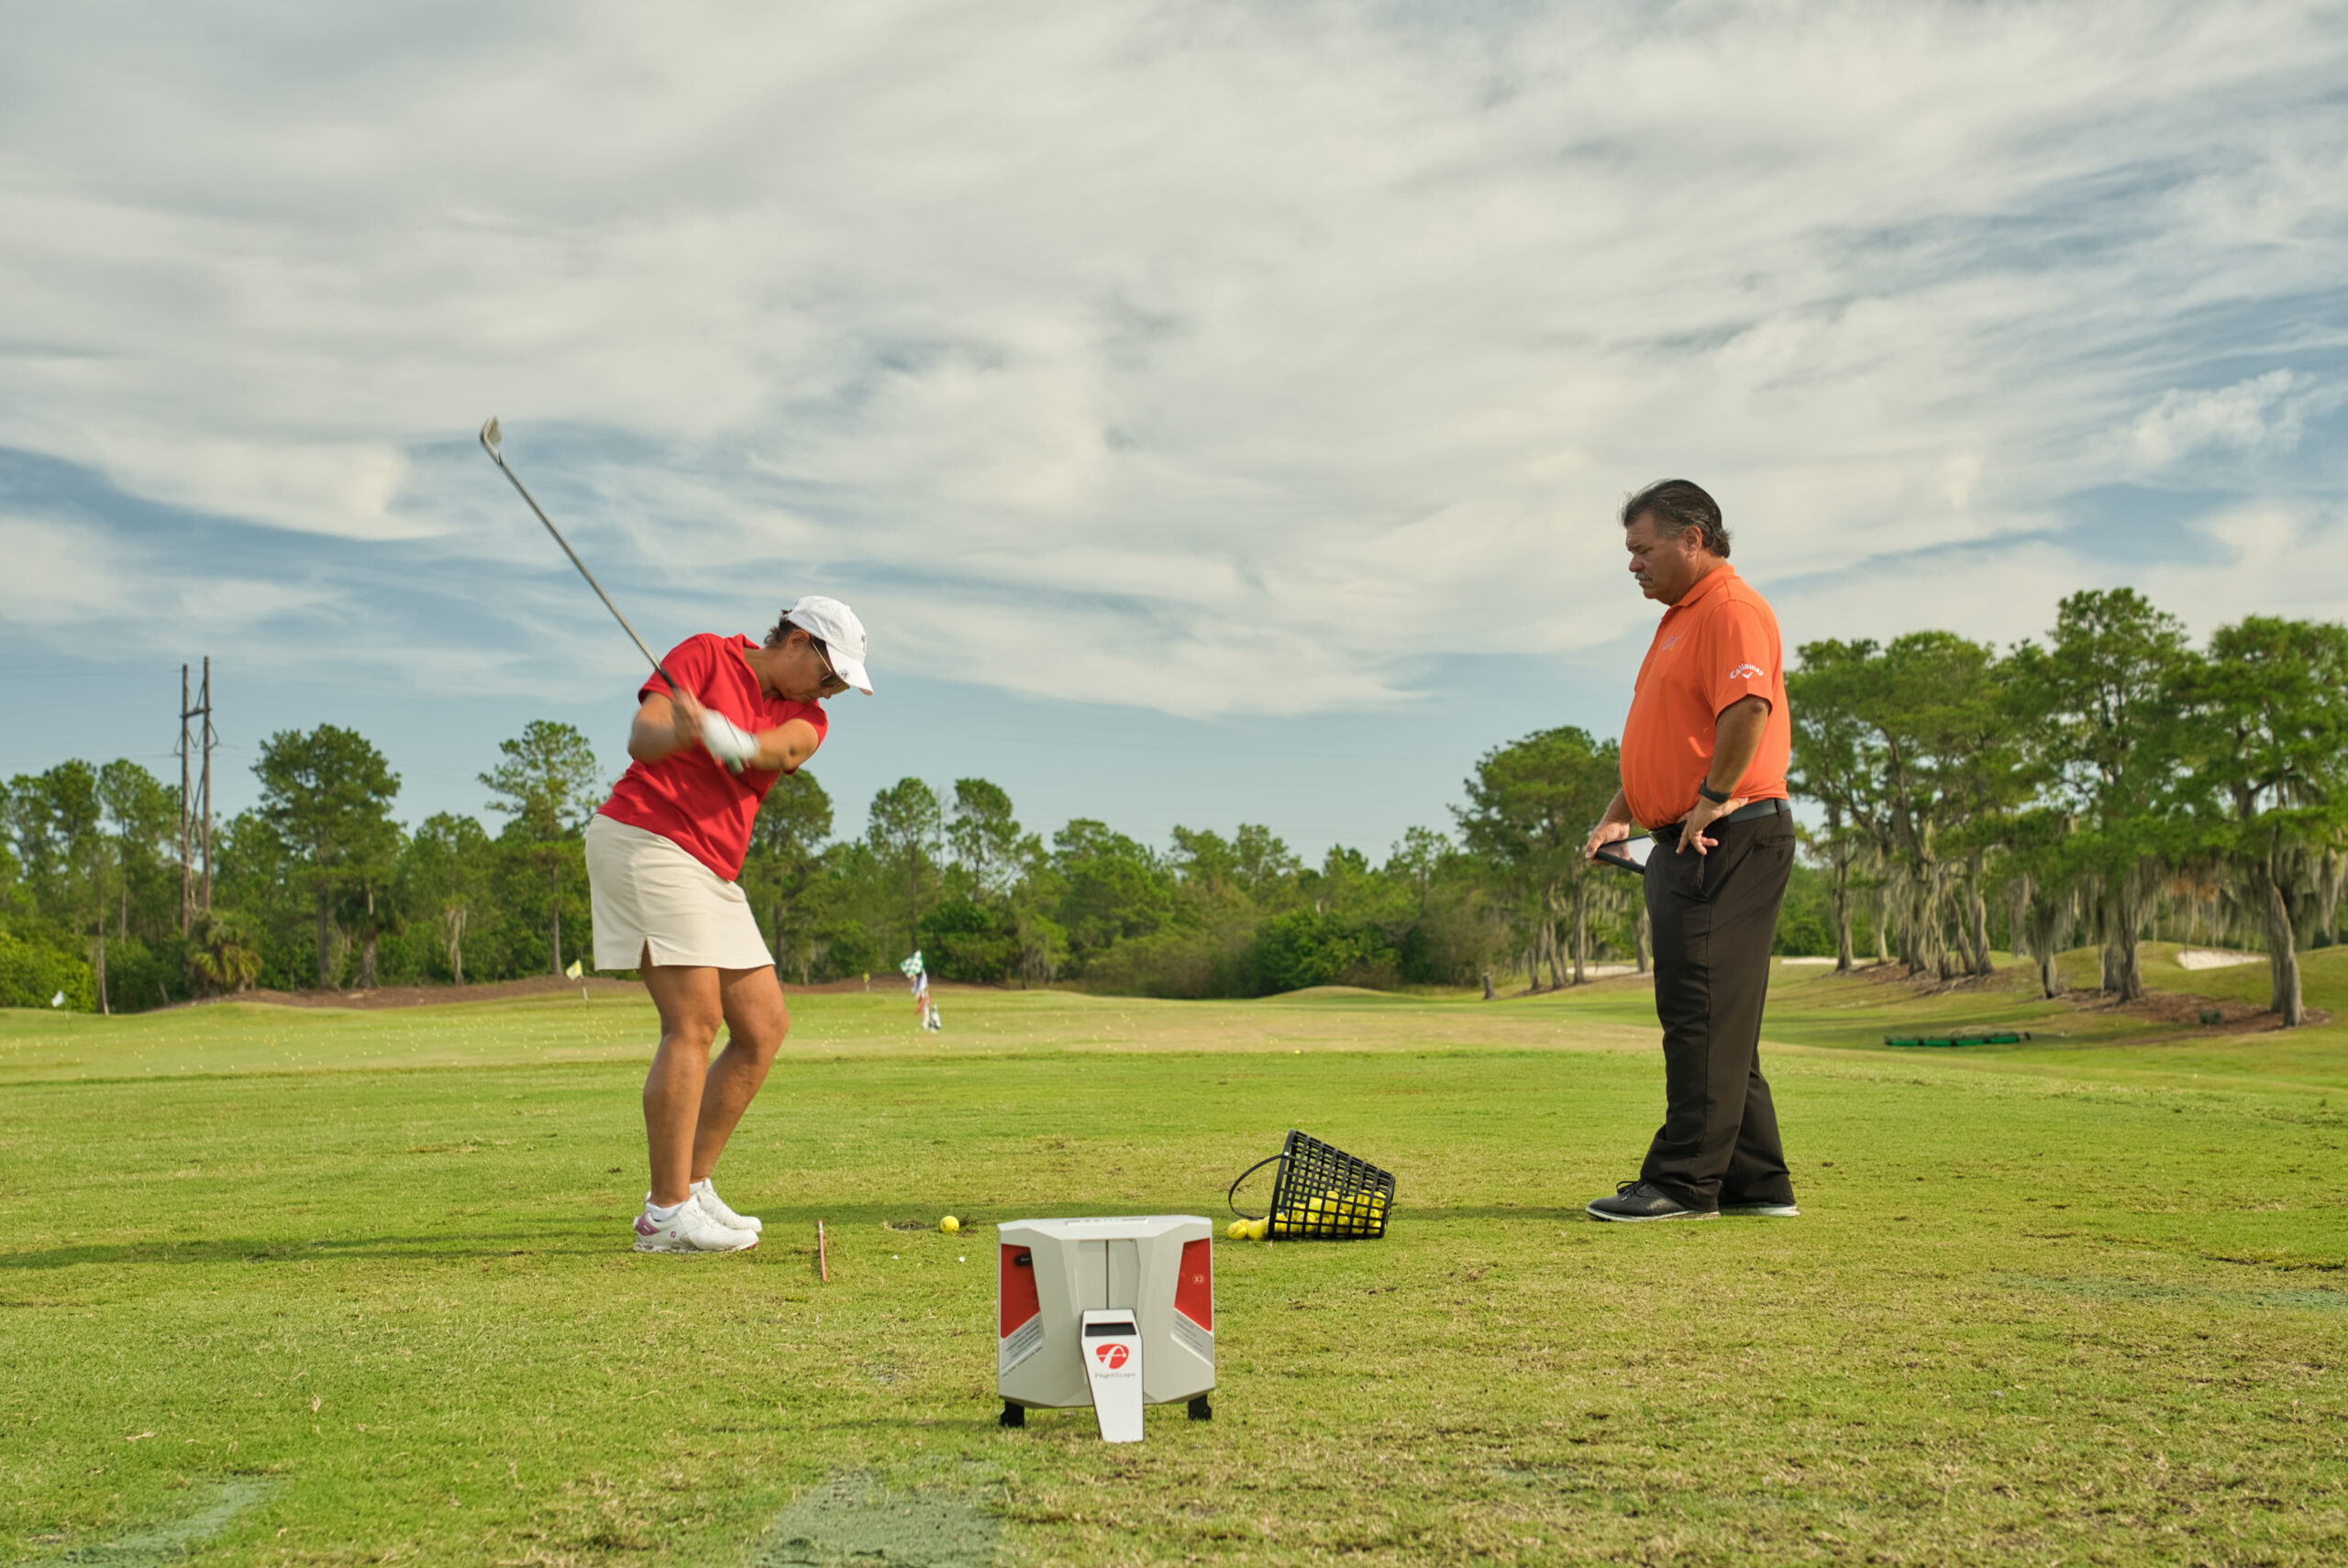 November Golf School Promotion, Golf Schools, Orlando Golf School, Golf Schools in Orlando, Florida GOlf School, Golf Schools in Florida, Golf Schools for Beginners